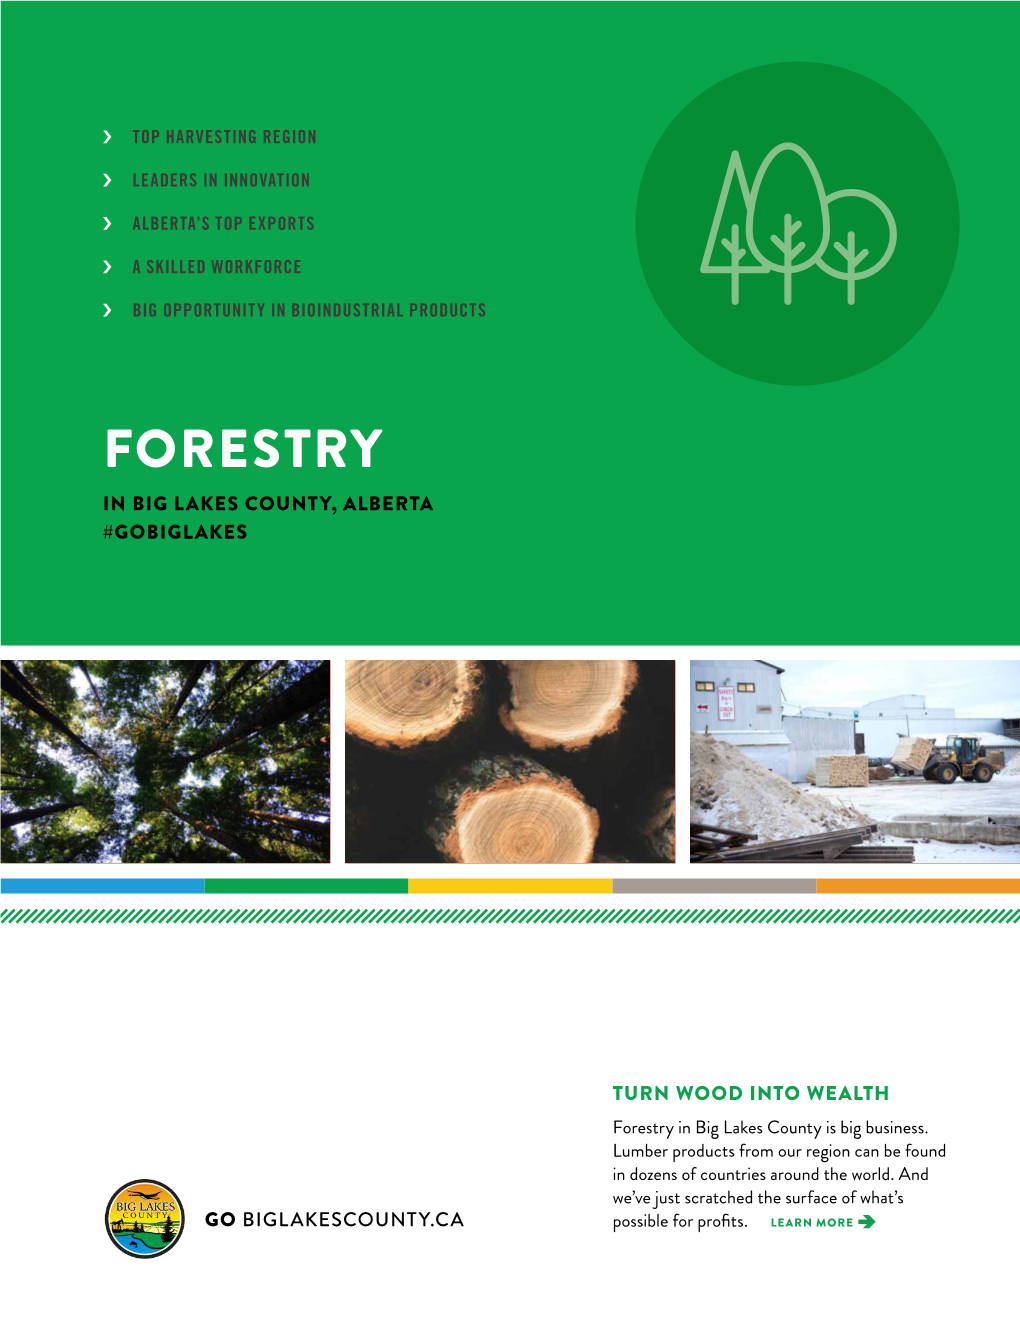 Forestry in Big Lakes County, Alberta #Gobiglakes